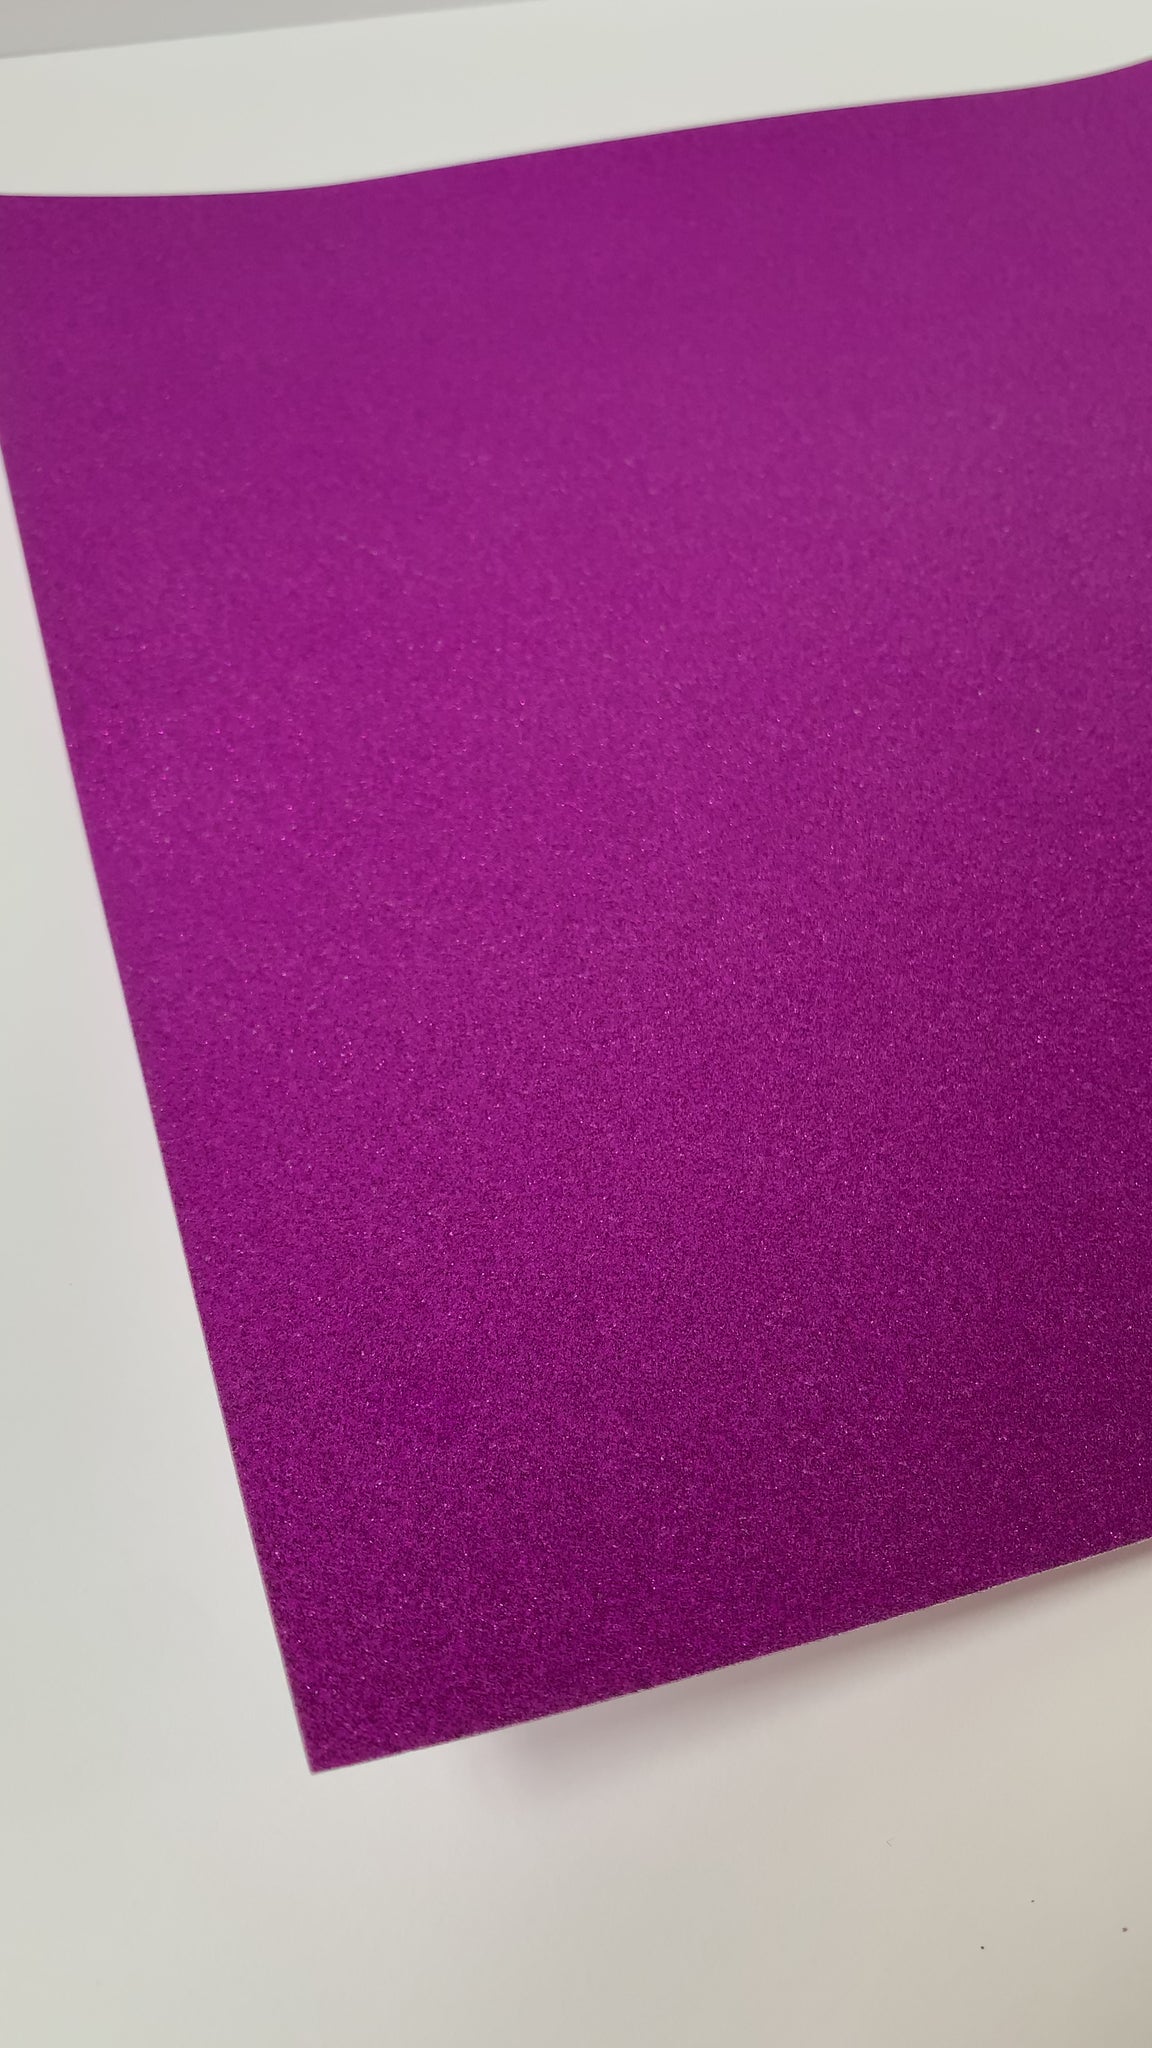 Rramorrra Purple Glitter Cardstock Paper 12 x 12 15 Sheets 350gsm/130lb  Heavyweight Premium Purple Sparkly Construction Paper for Cricut Machine